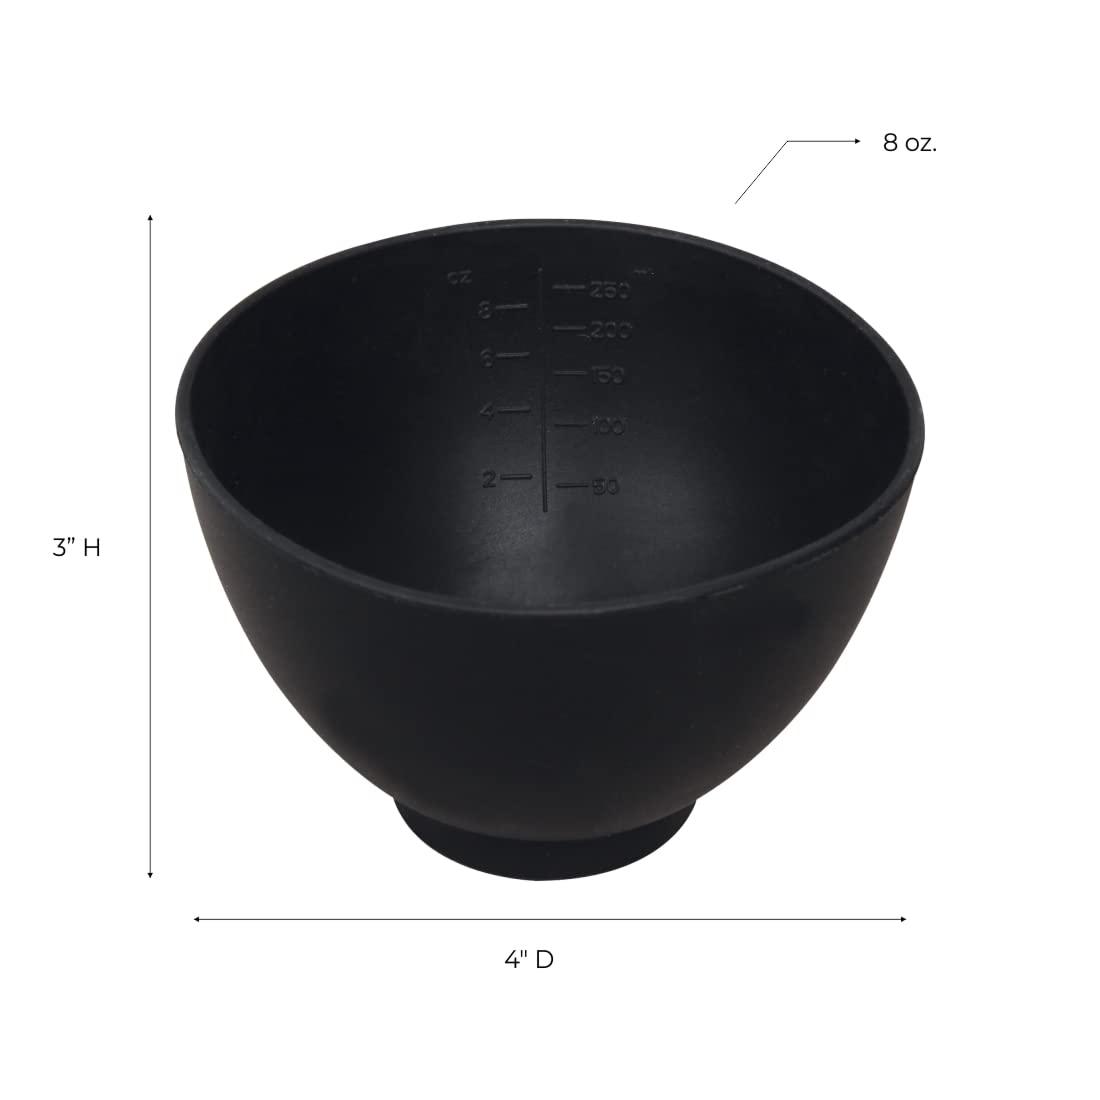  ForPro Silicone Mixing Bowl, Black, Flexible